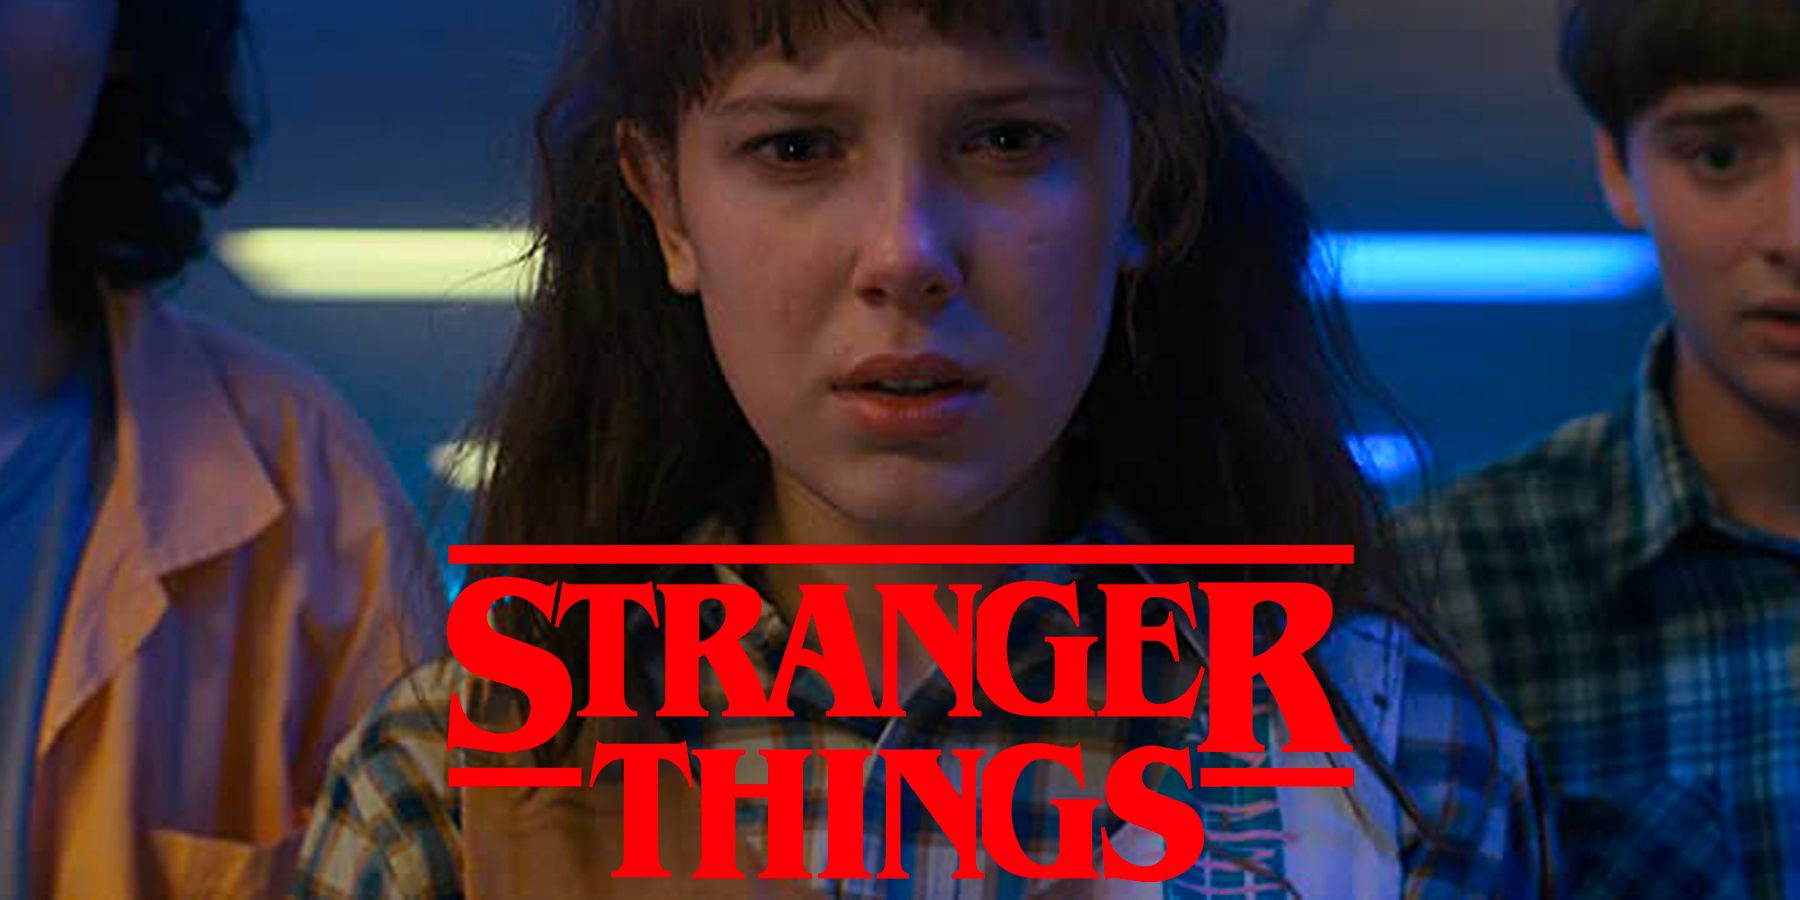 Stranger Things 4' Is Now Netflix's Top English-Language TV Season